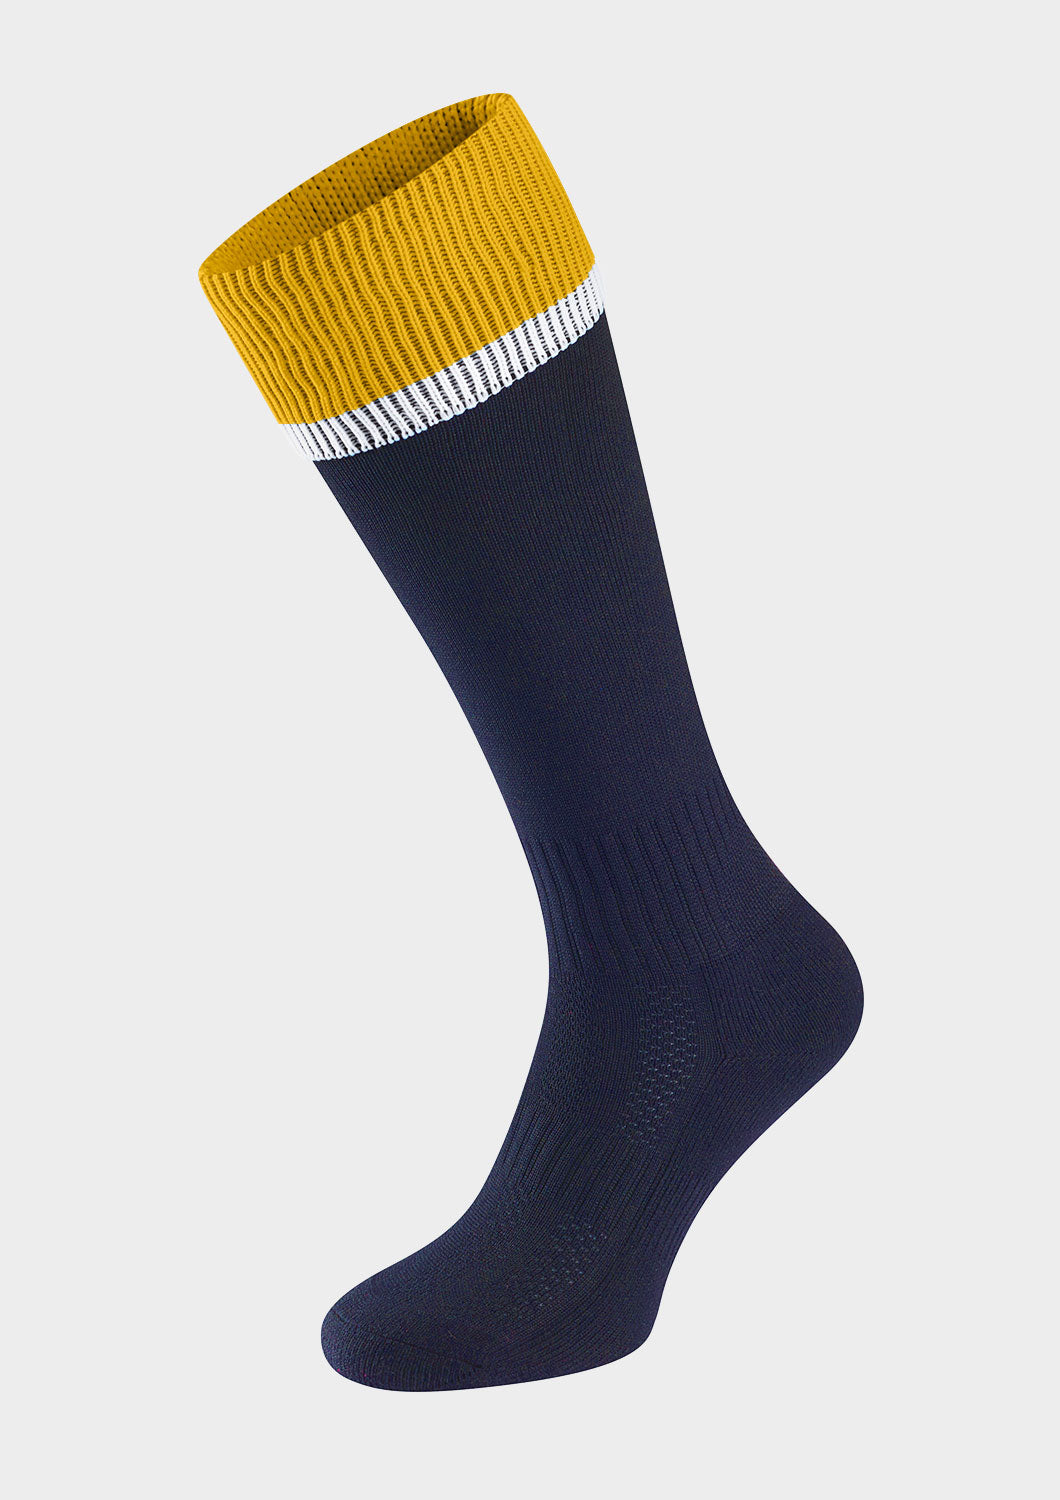 Navy/Amber Pro-Weight Sports Socks